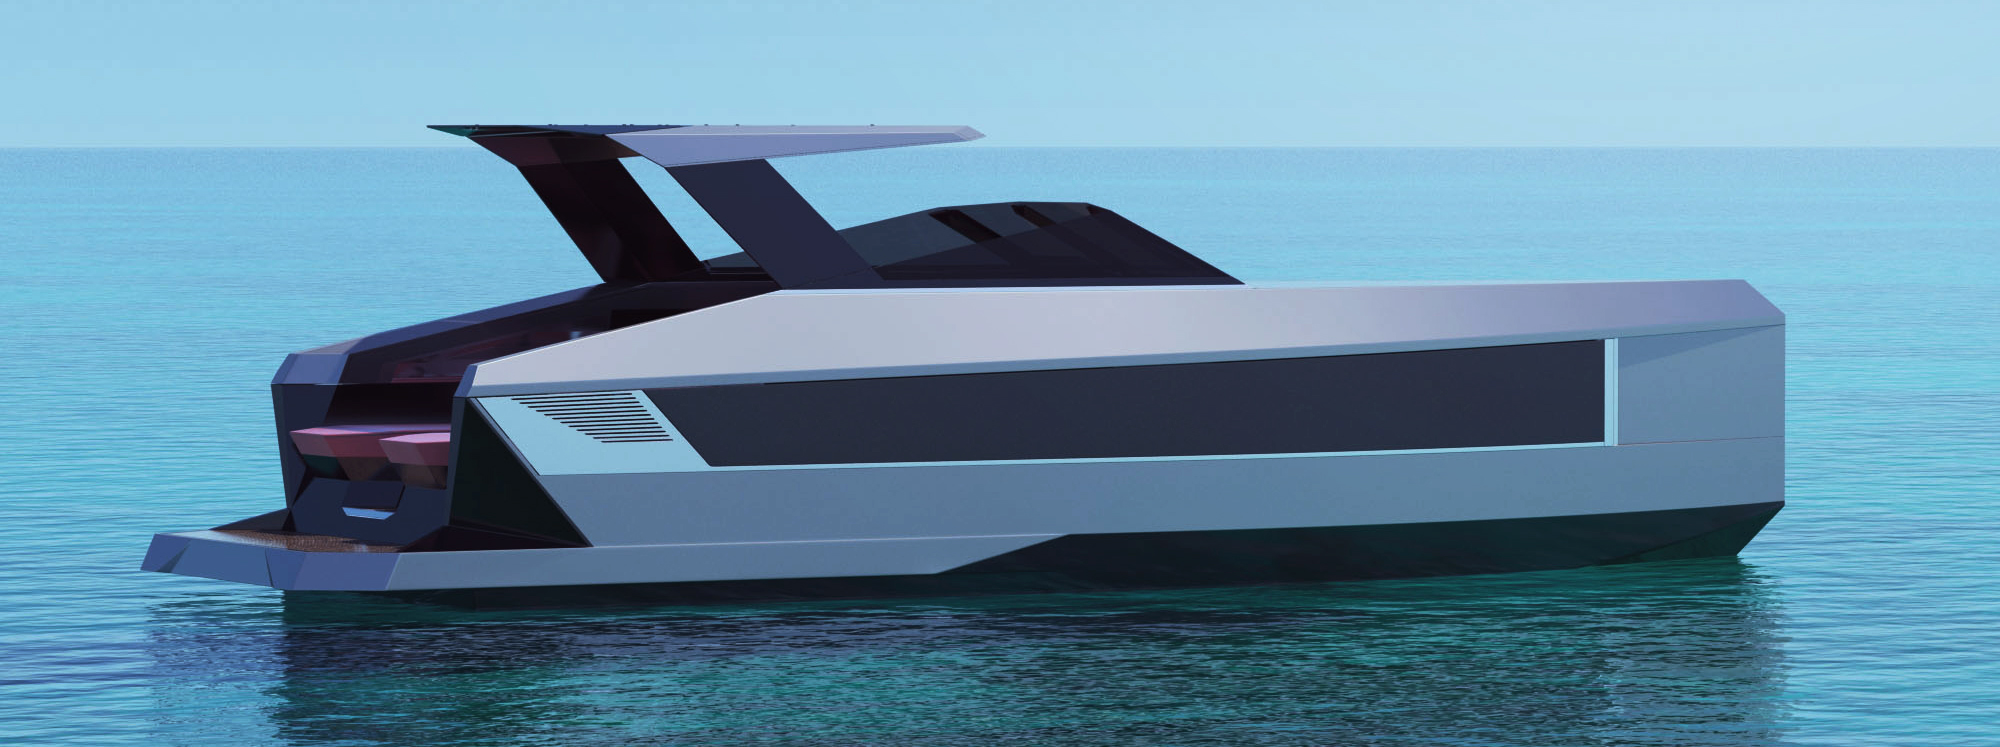 Boat design